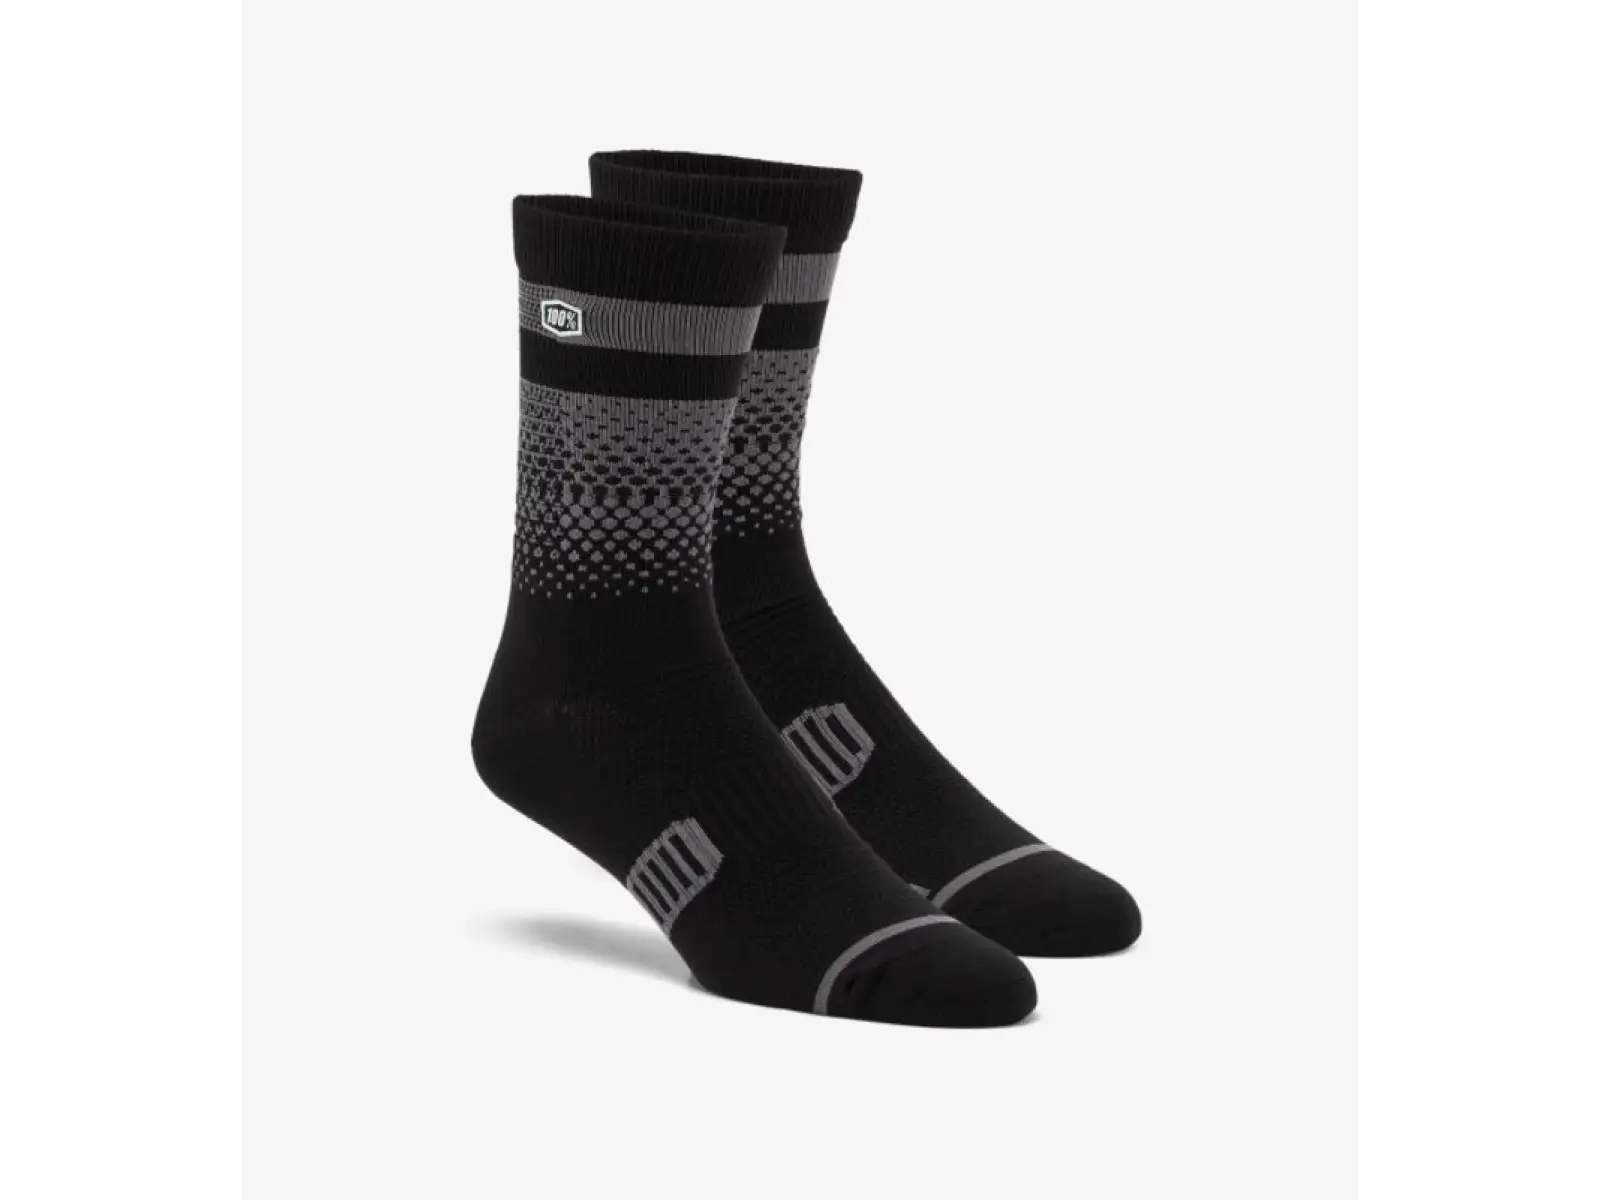 100% Advocate Performance ponožky Black/Charcoal